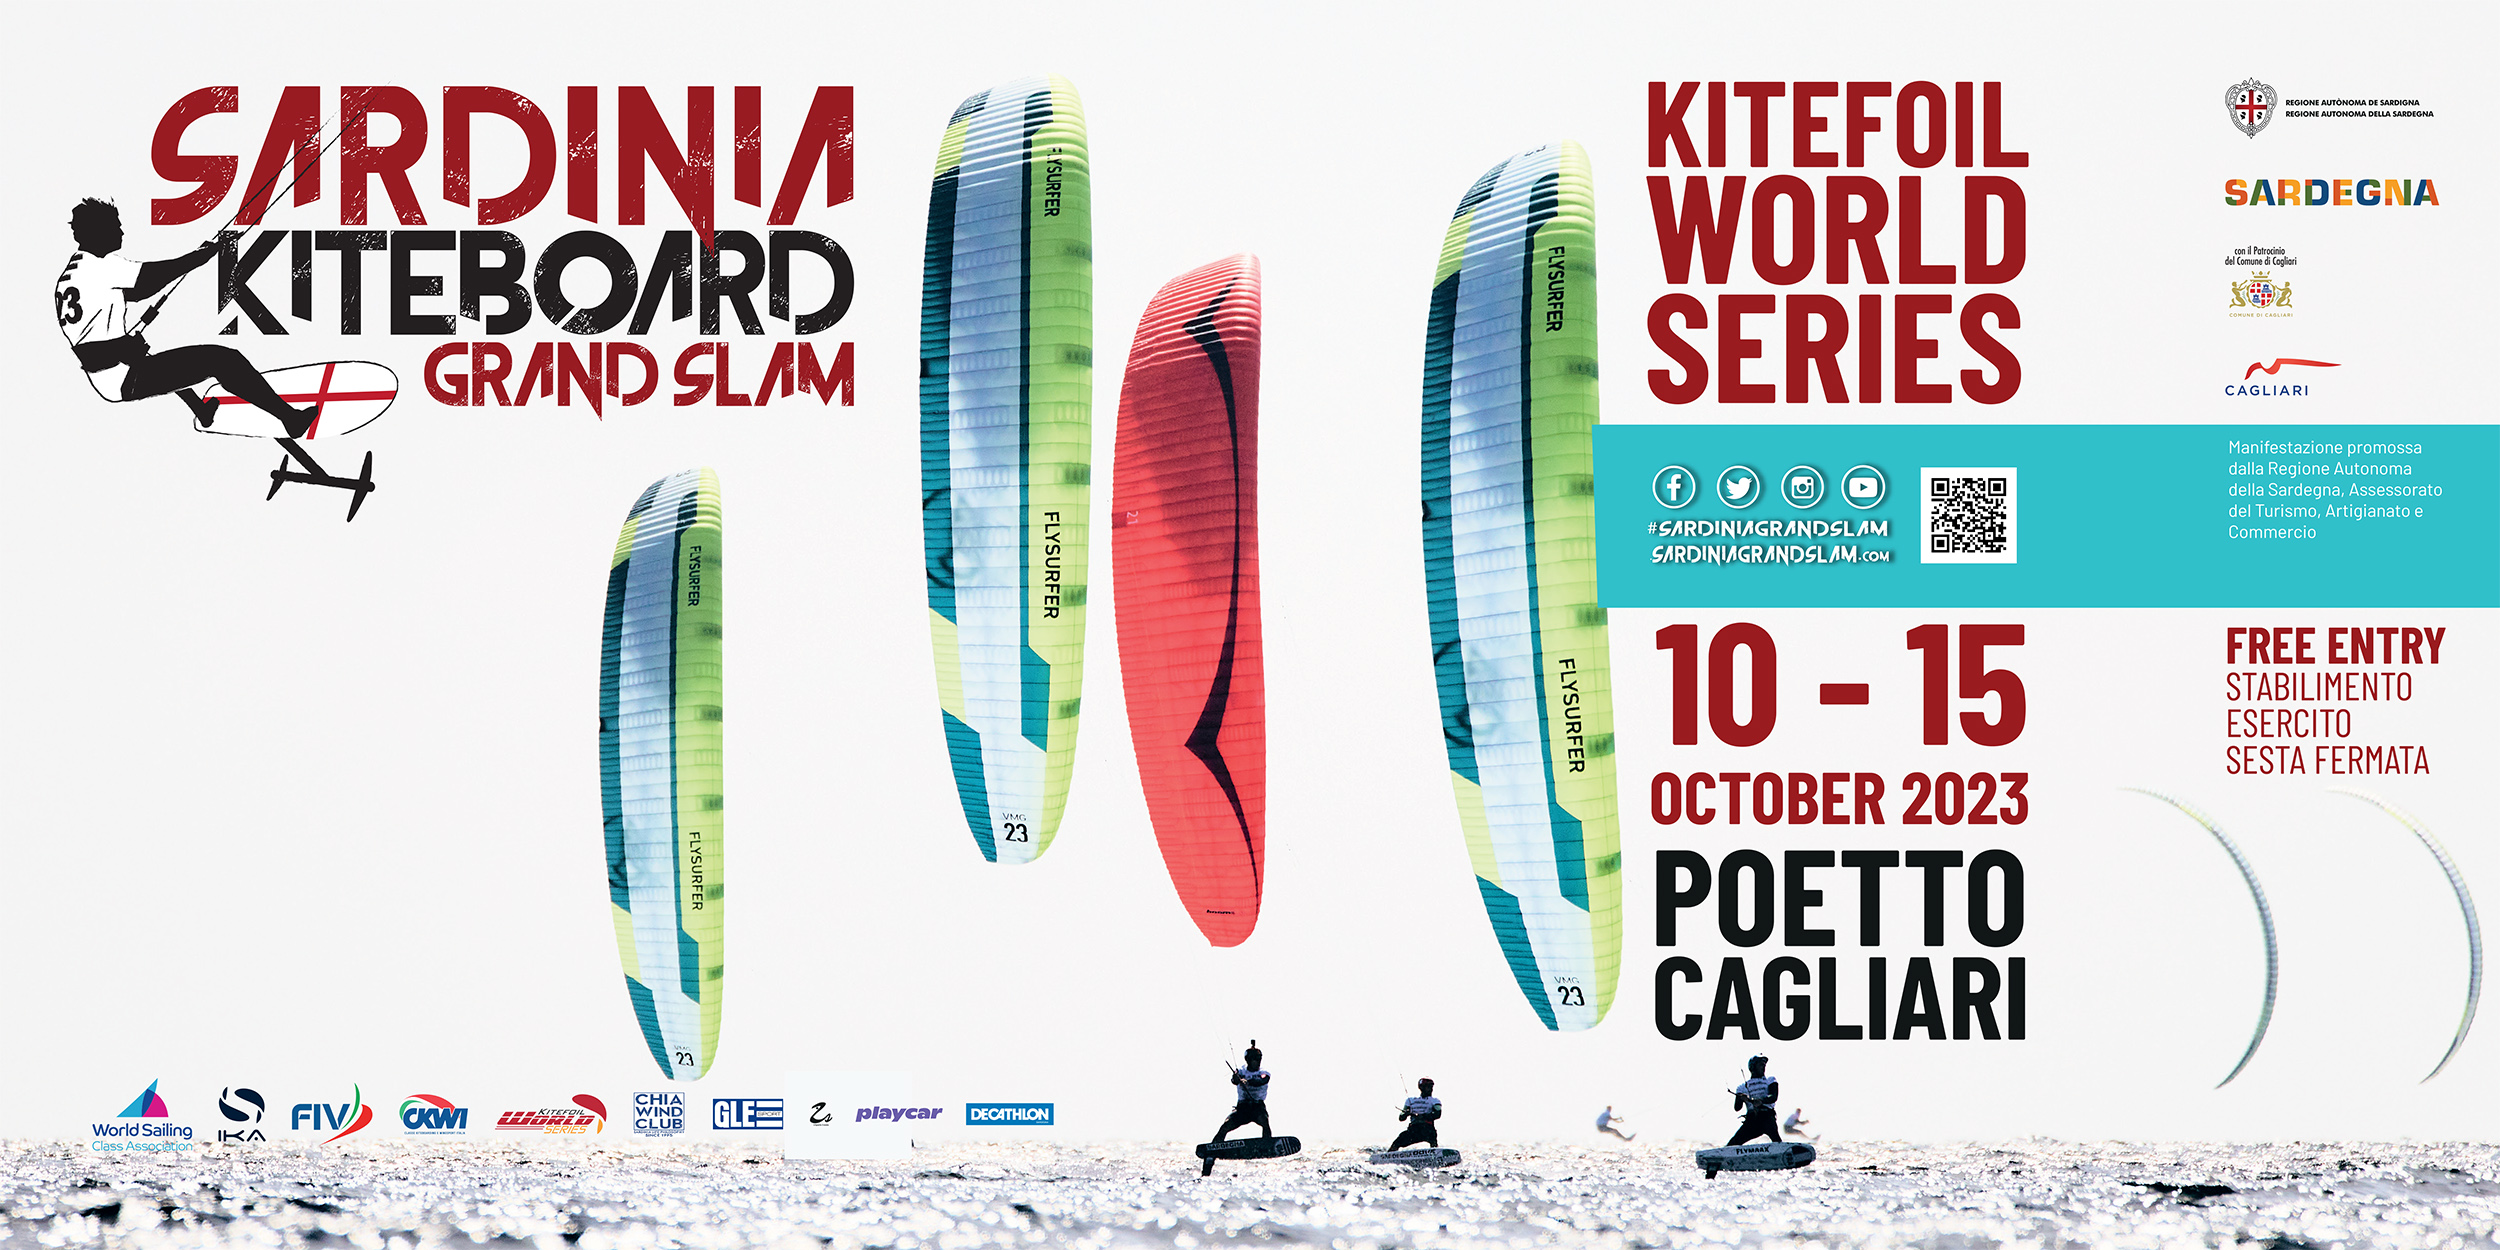 Ika Kite Foil World Series - Sardinia Kiteboard Grand Slam